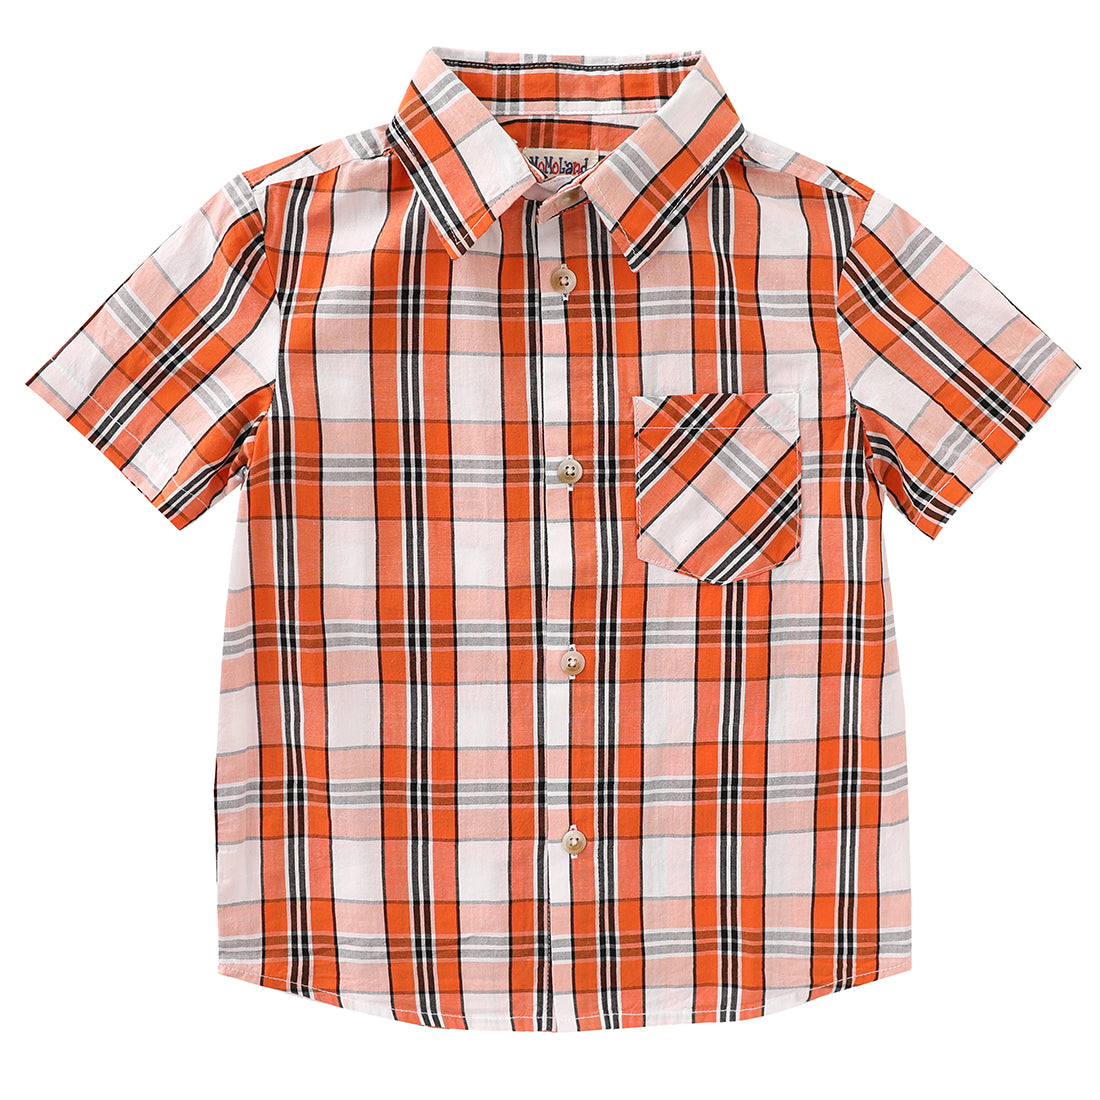 boy short sleeve orange/black plaid shirt front